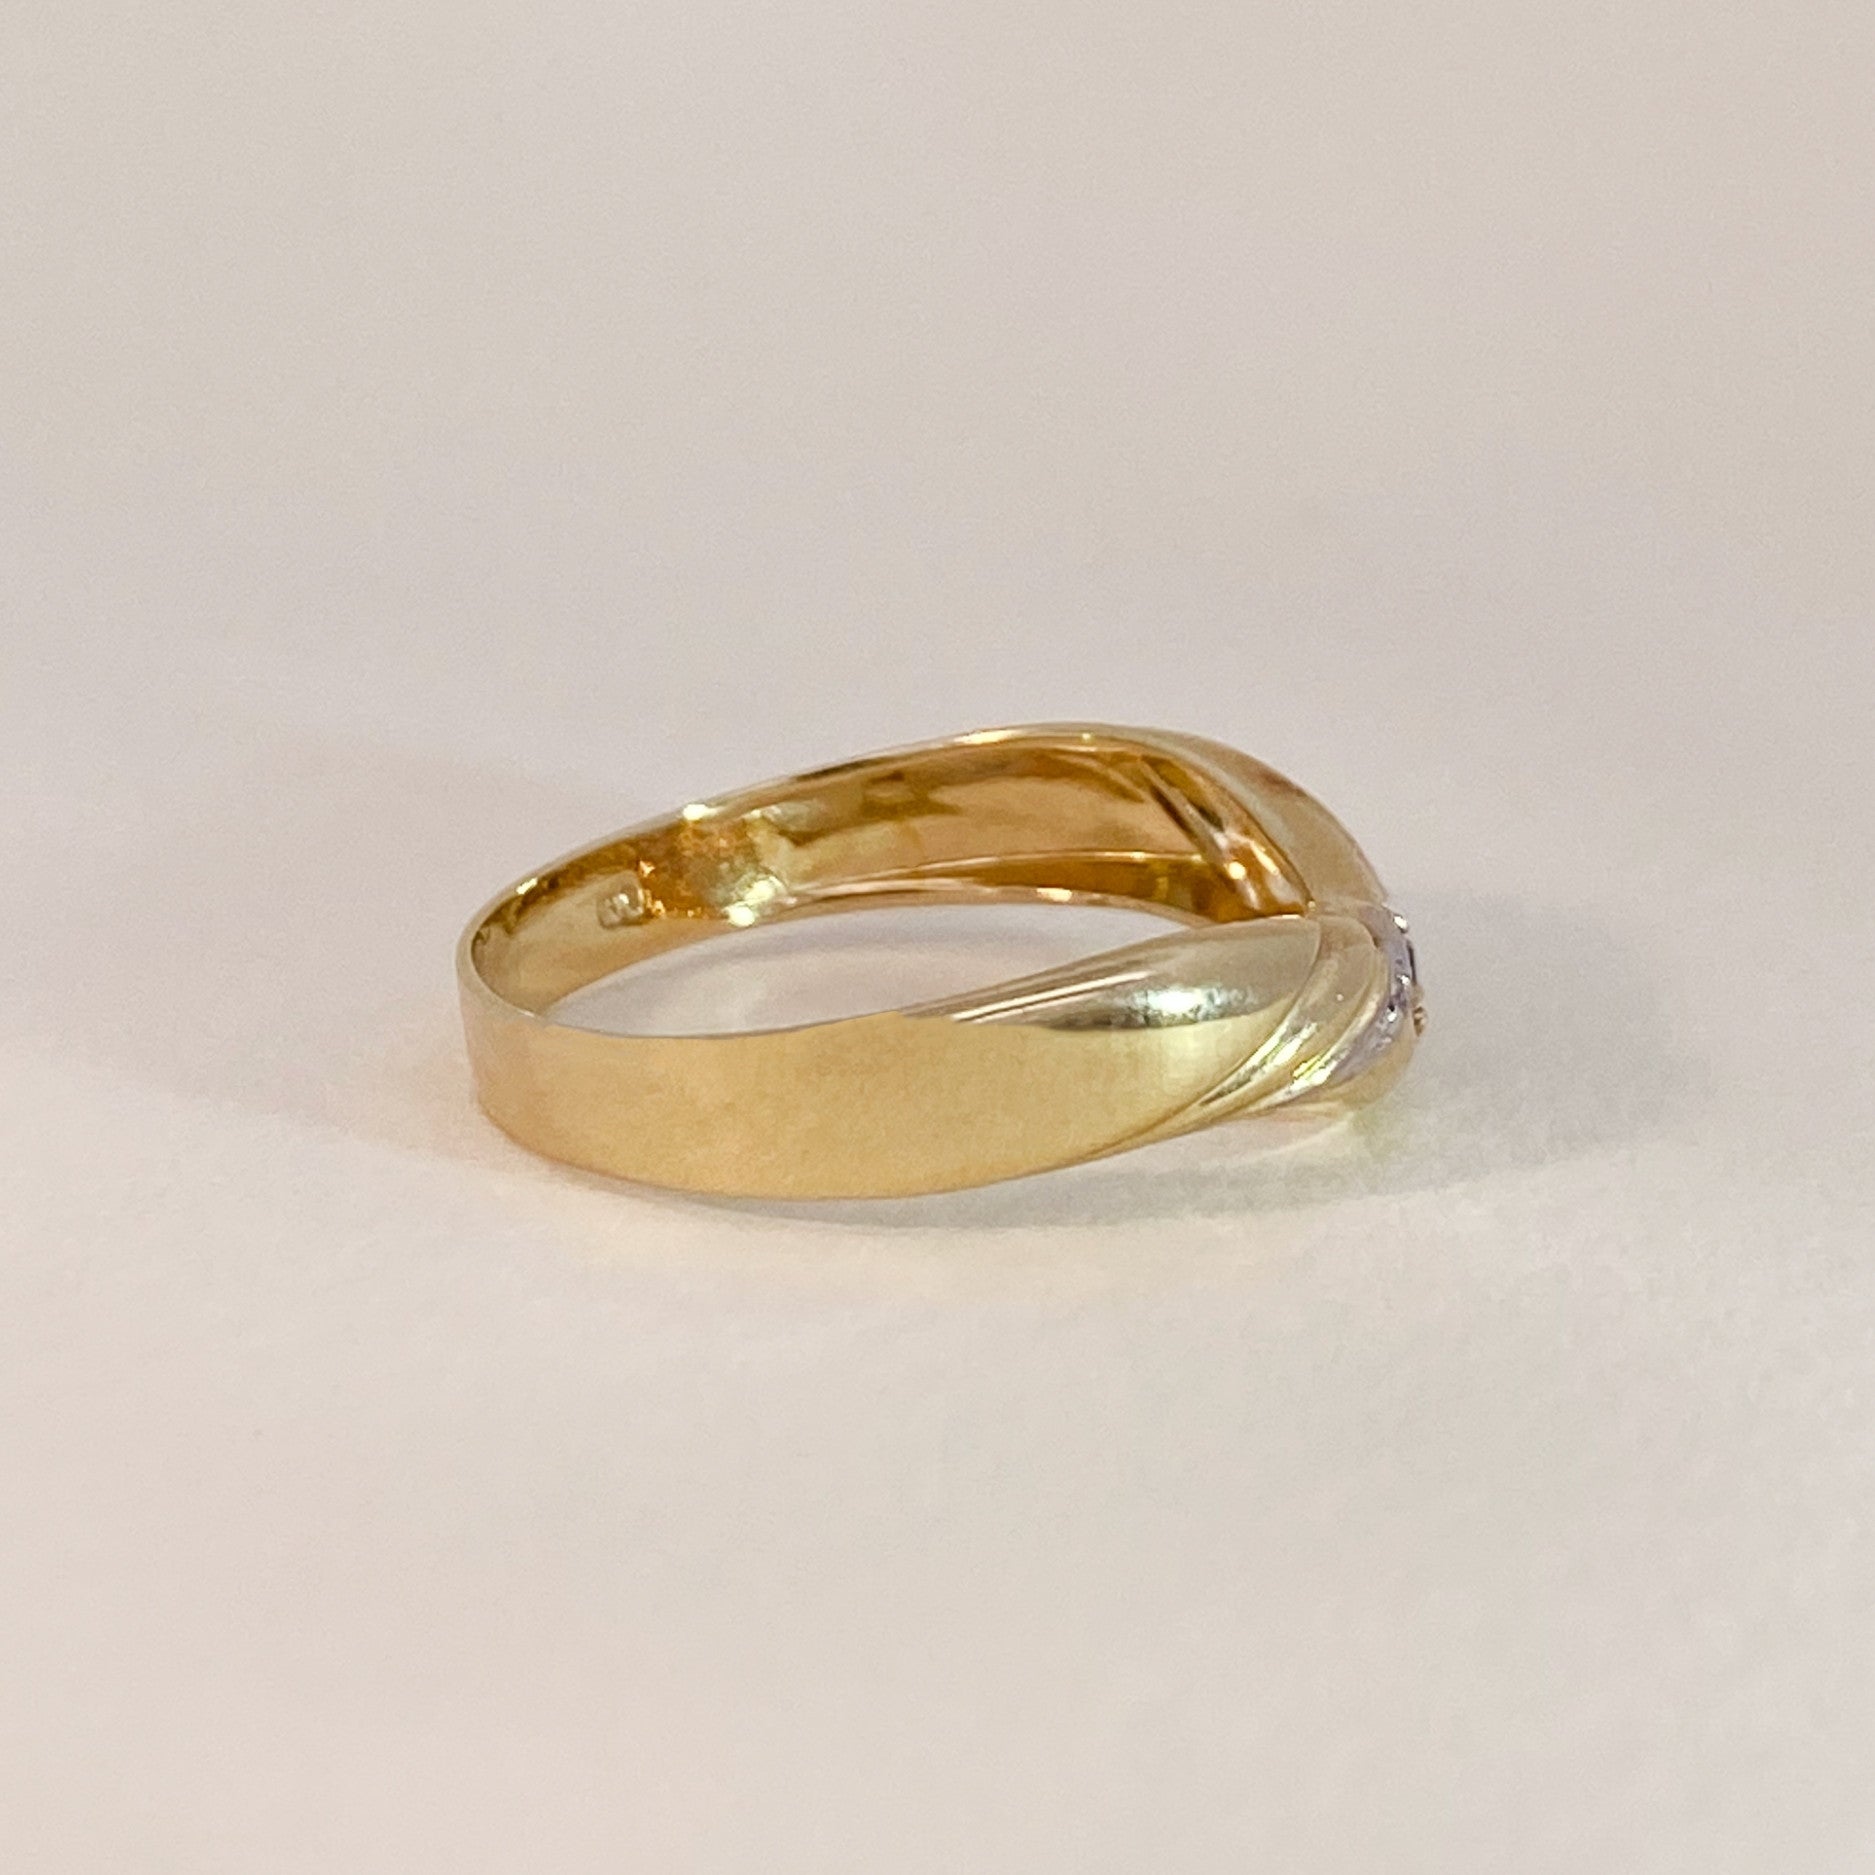 Vintage ring sapphire diamonds